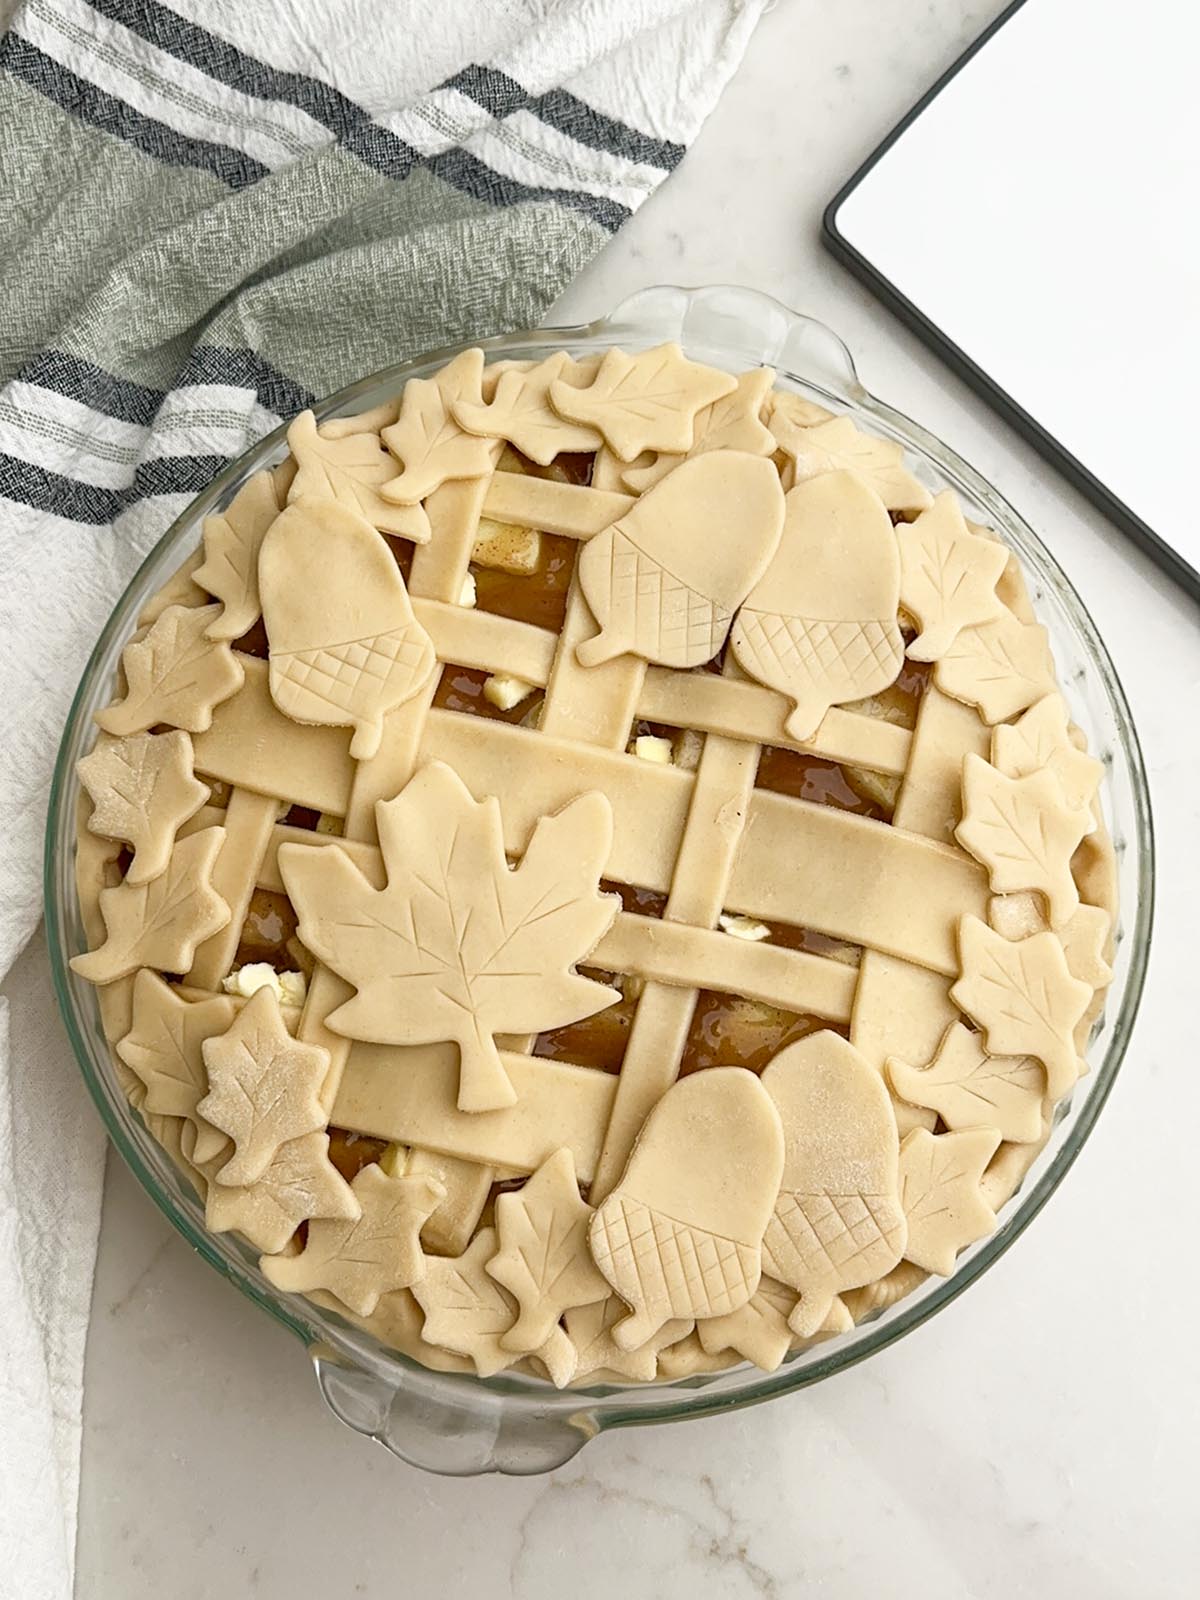 Plaid lattice topped apple pie with pie dough cutouts.